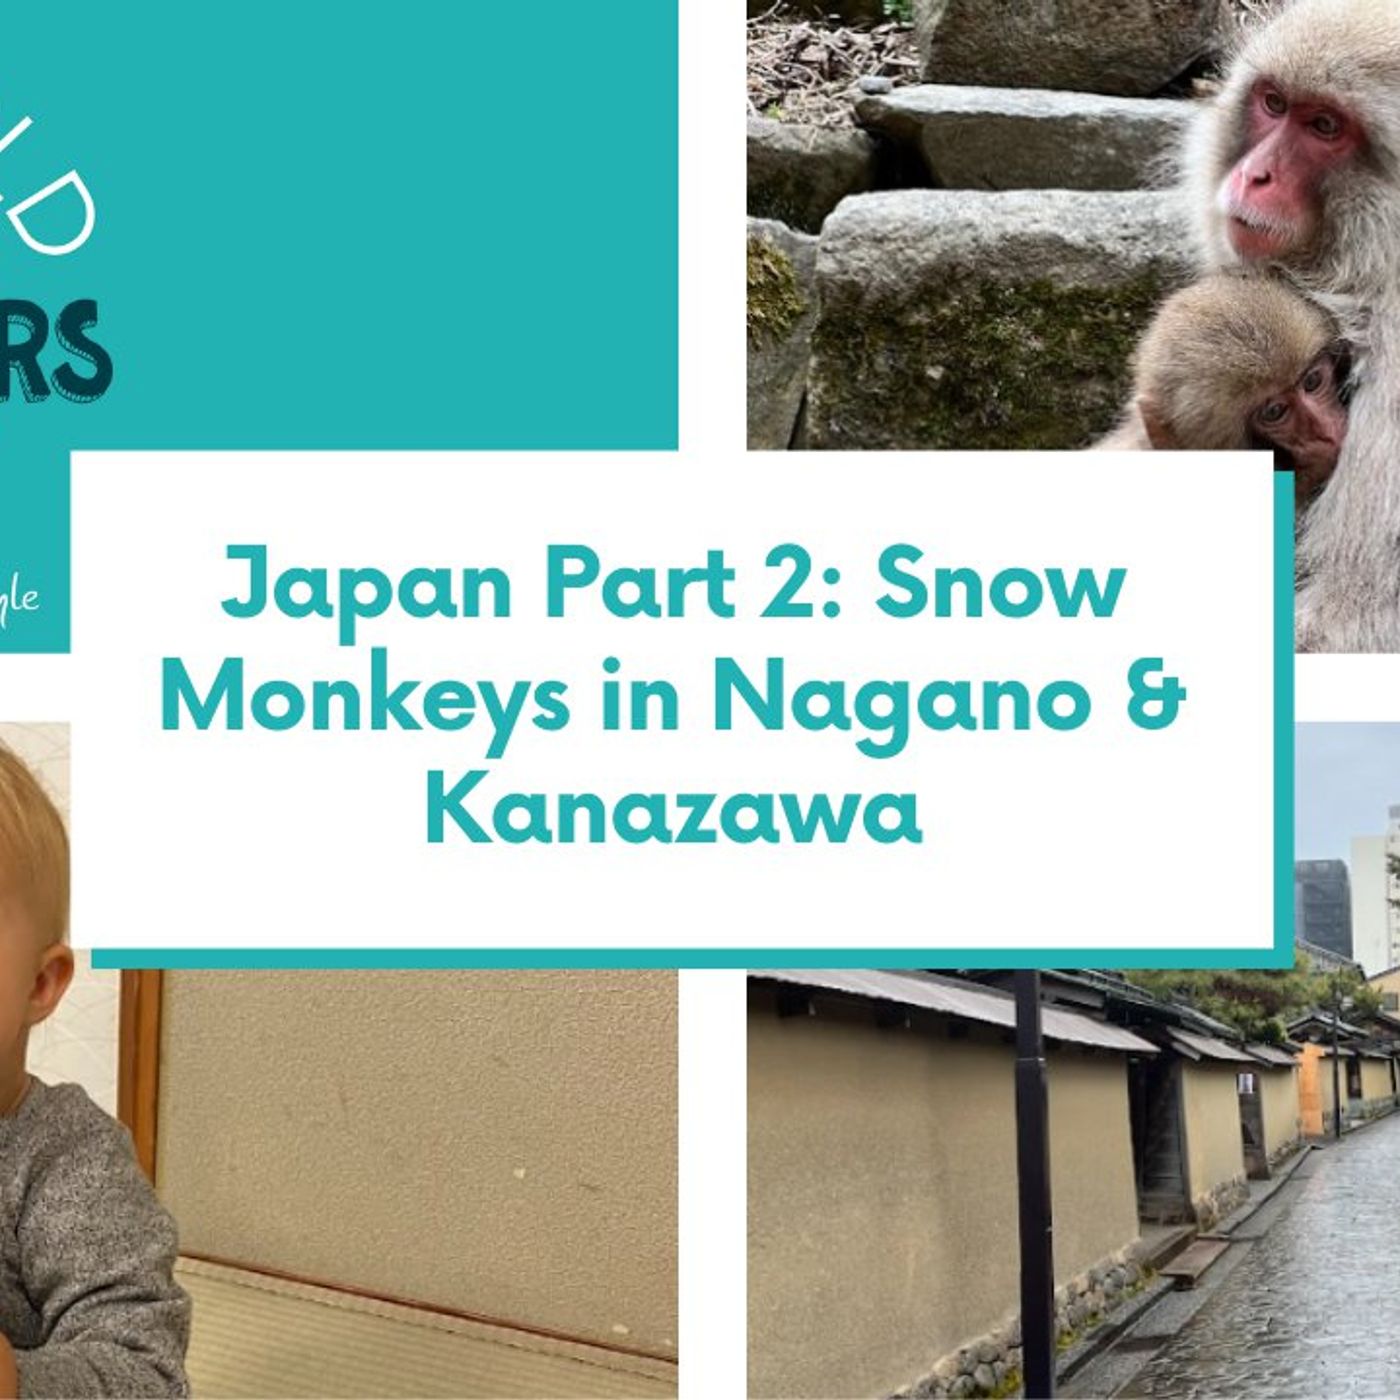 Japan Part 2: Snow Monkeys in Nagano & Kanazawa